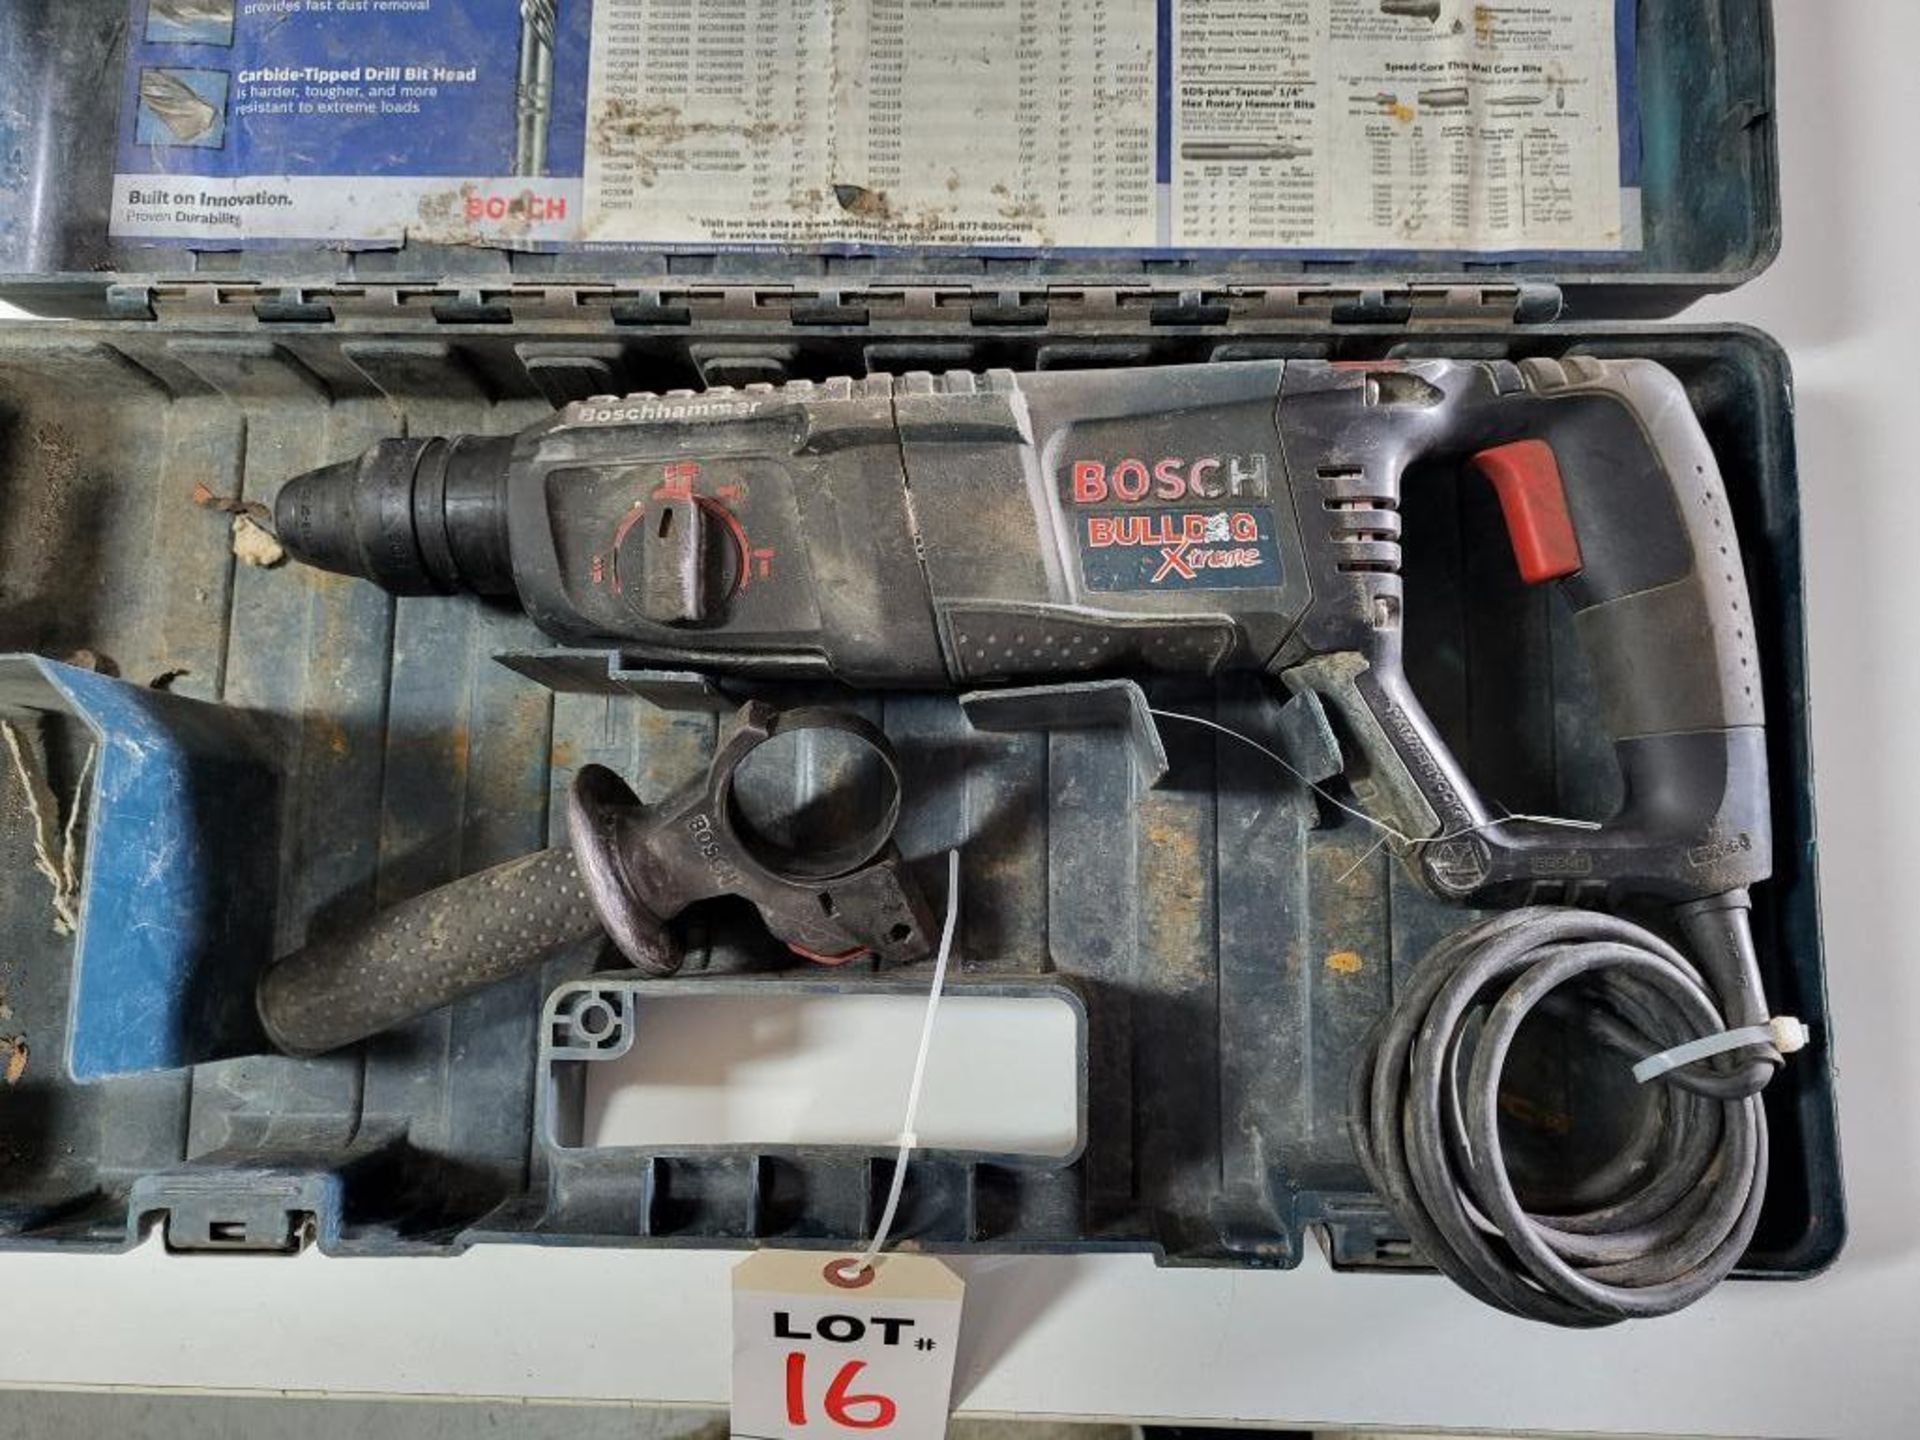 Bosch Bulldog Xtreme Hammer Drill IN CASE M/N 11255VSR - Image 2 of 3